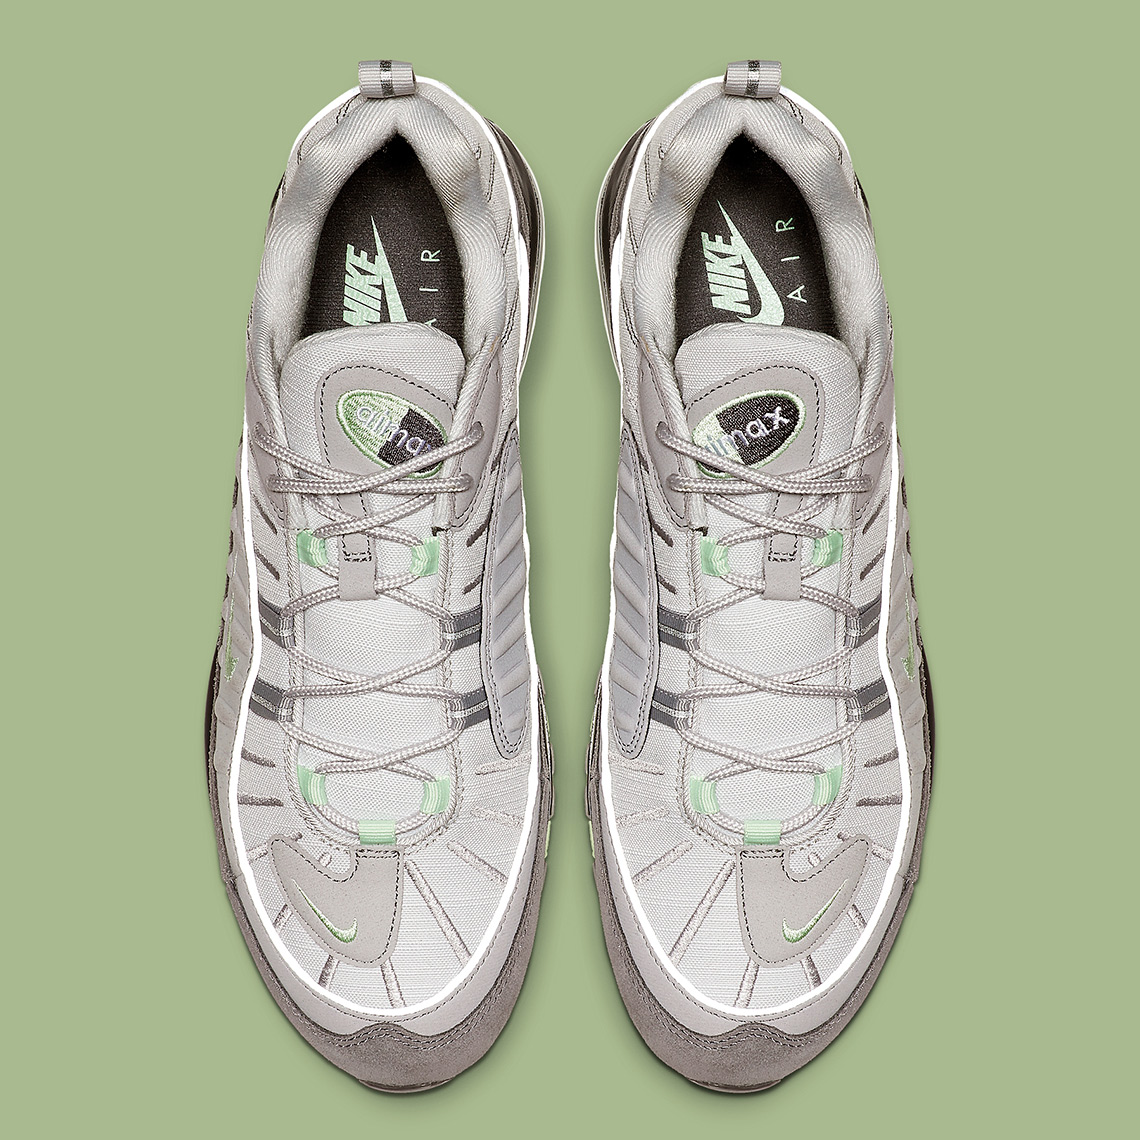 grey and mint green air max 98